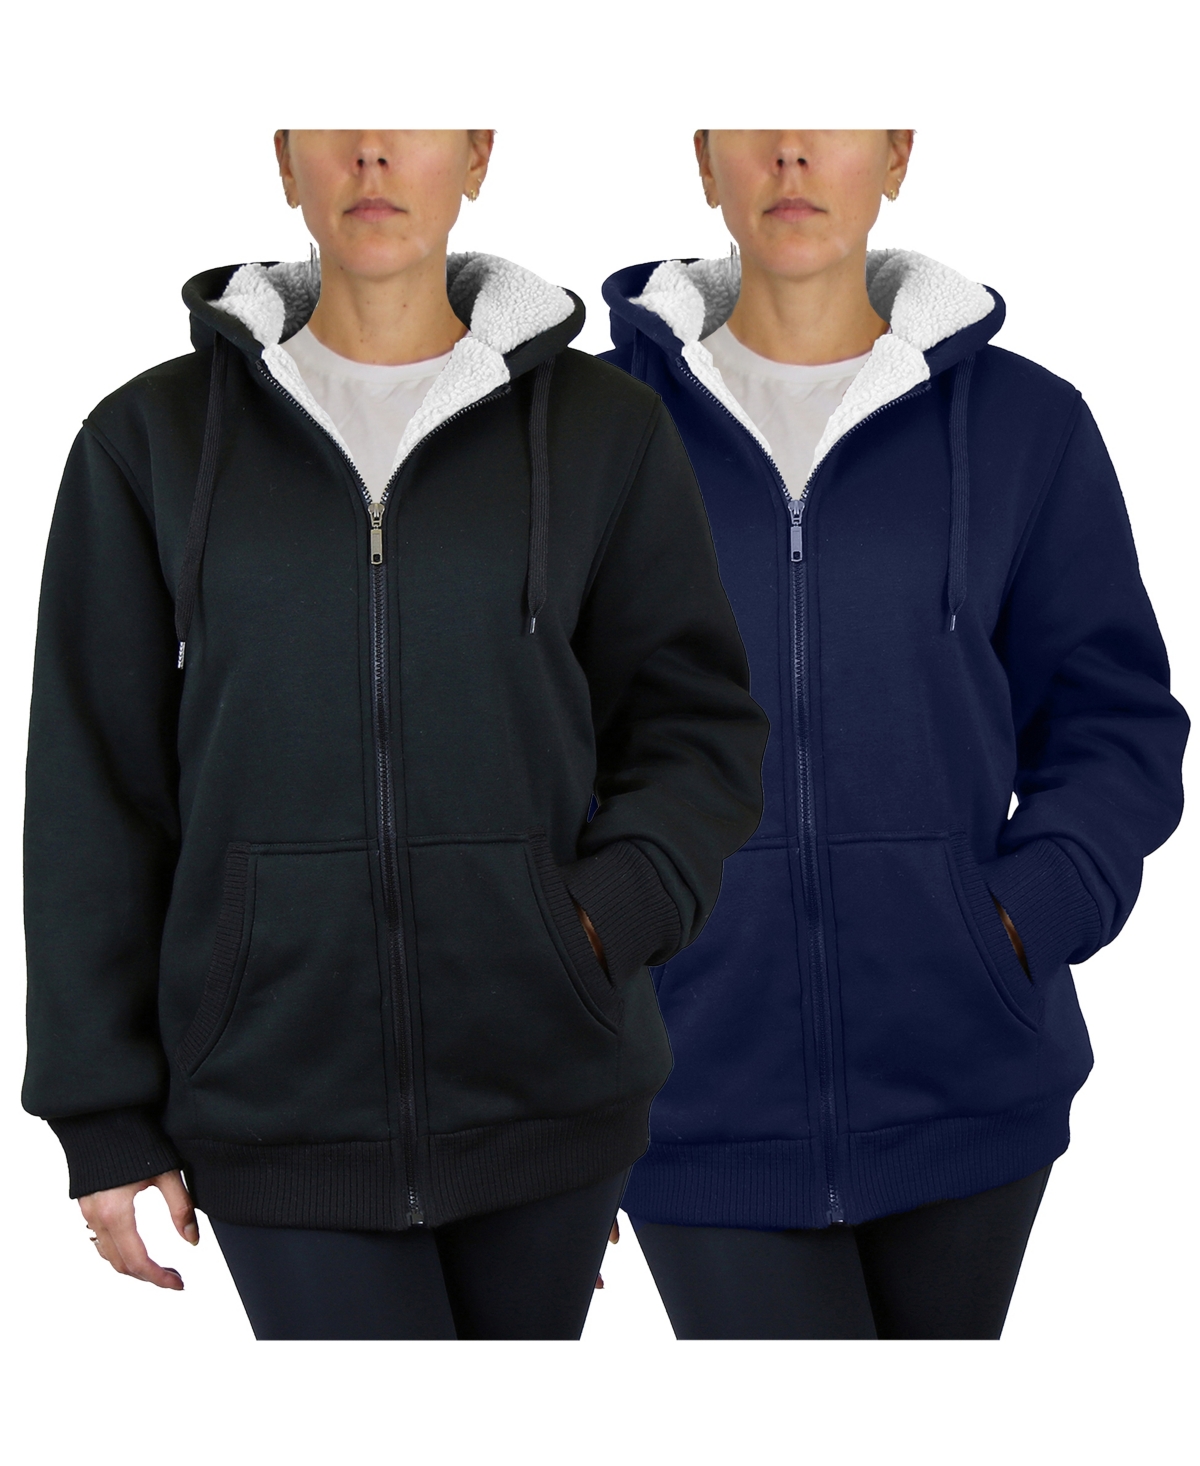 Women's Loose Fit Sherpa Lined Fleece Zip-Up Hoodie Sweatshirt, Pack of 2 - Black, Navy